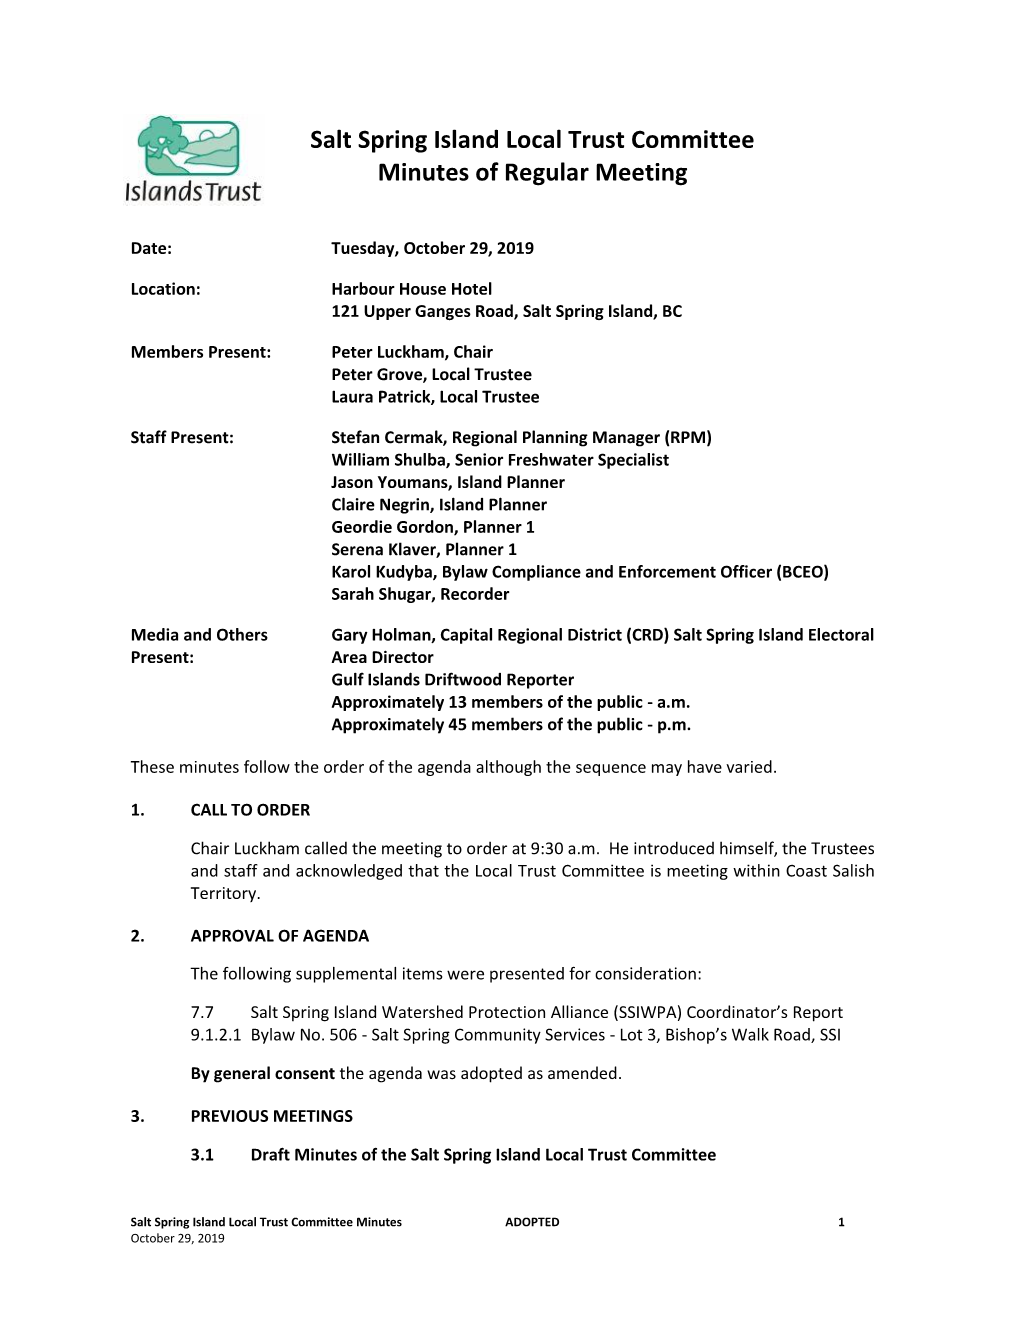 Salt Spring Island Local Trust Committee Minutes of Regular Meeting